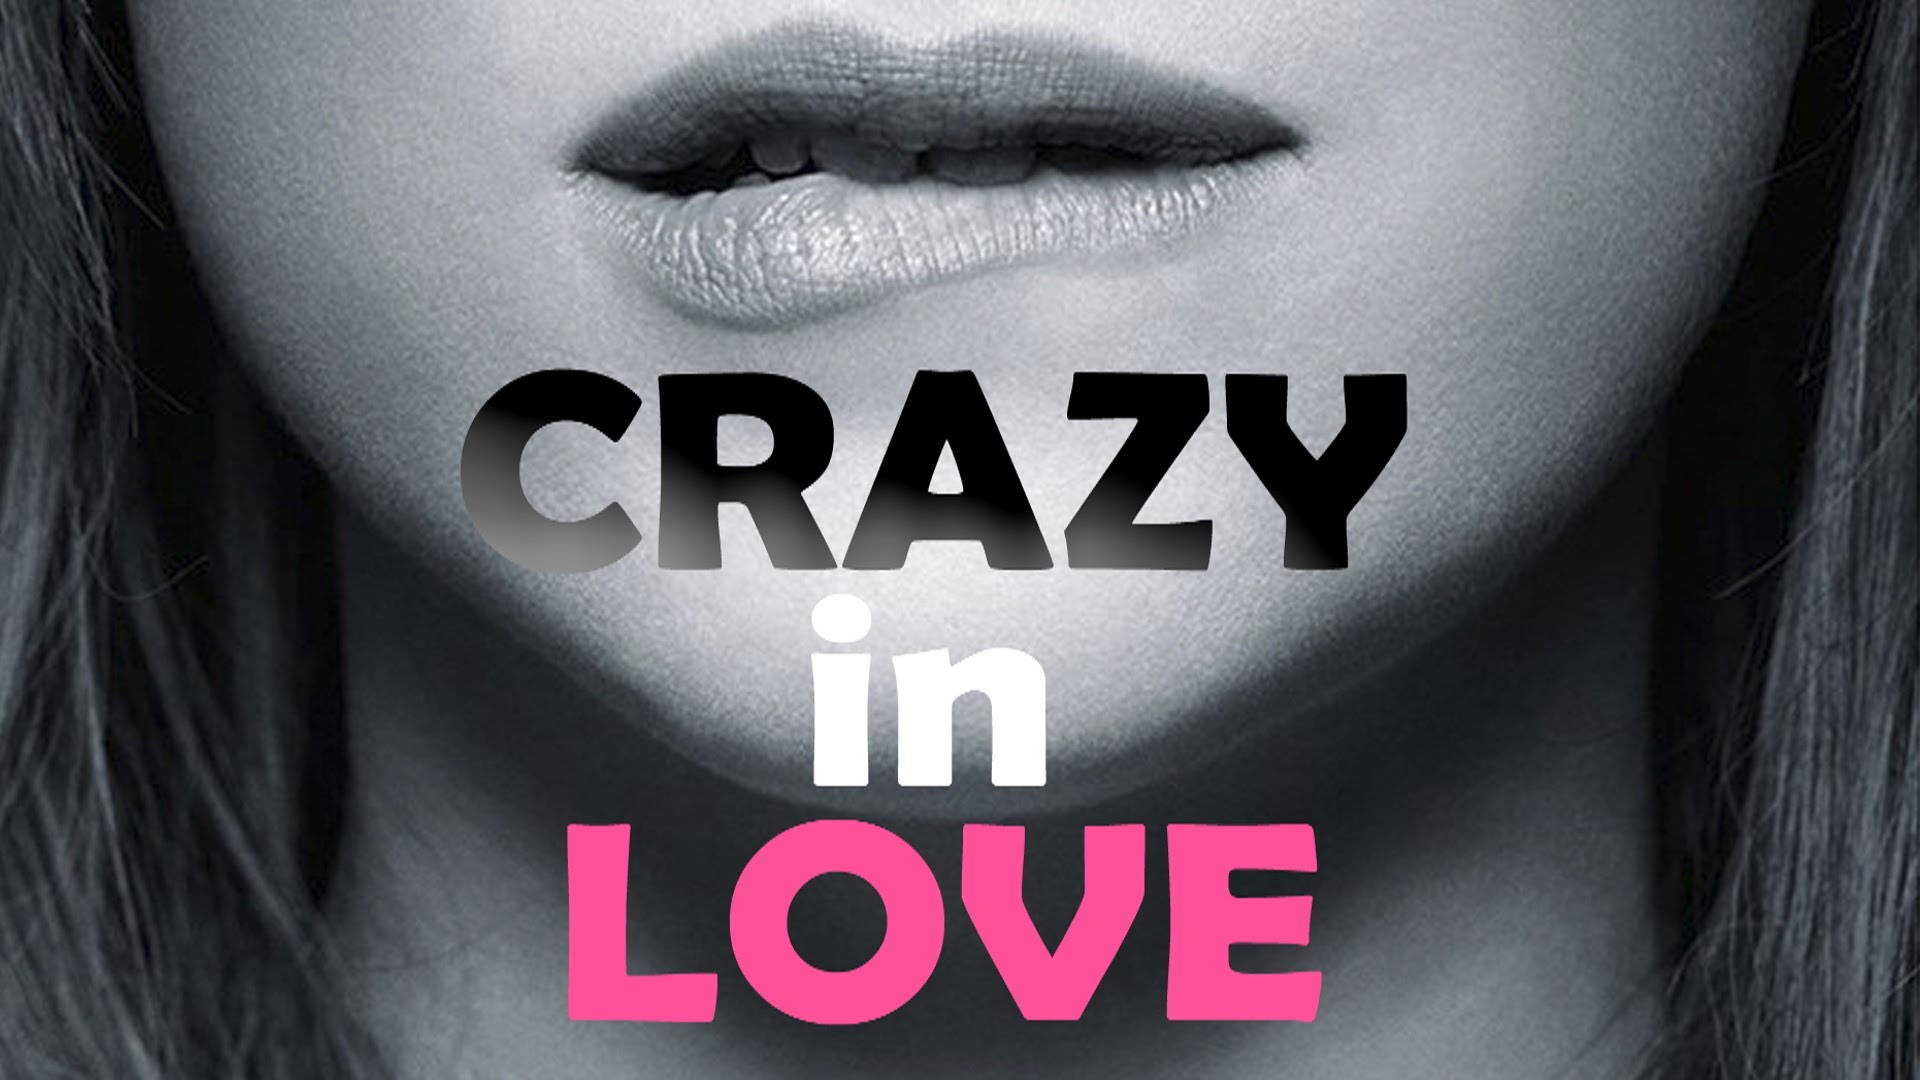 Песня i love me crazy. Crazy in Love обложка. Crazy in Love Beyonce обложка. Beyonce, Jay-z - Crazy in Love обложка. Crazy Love.